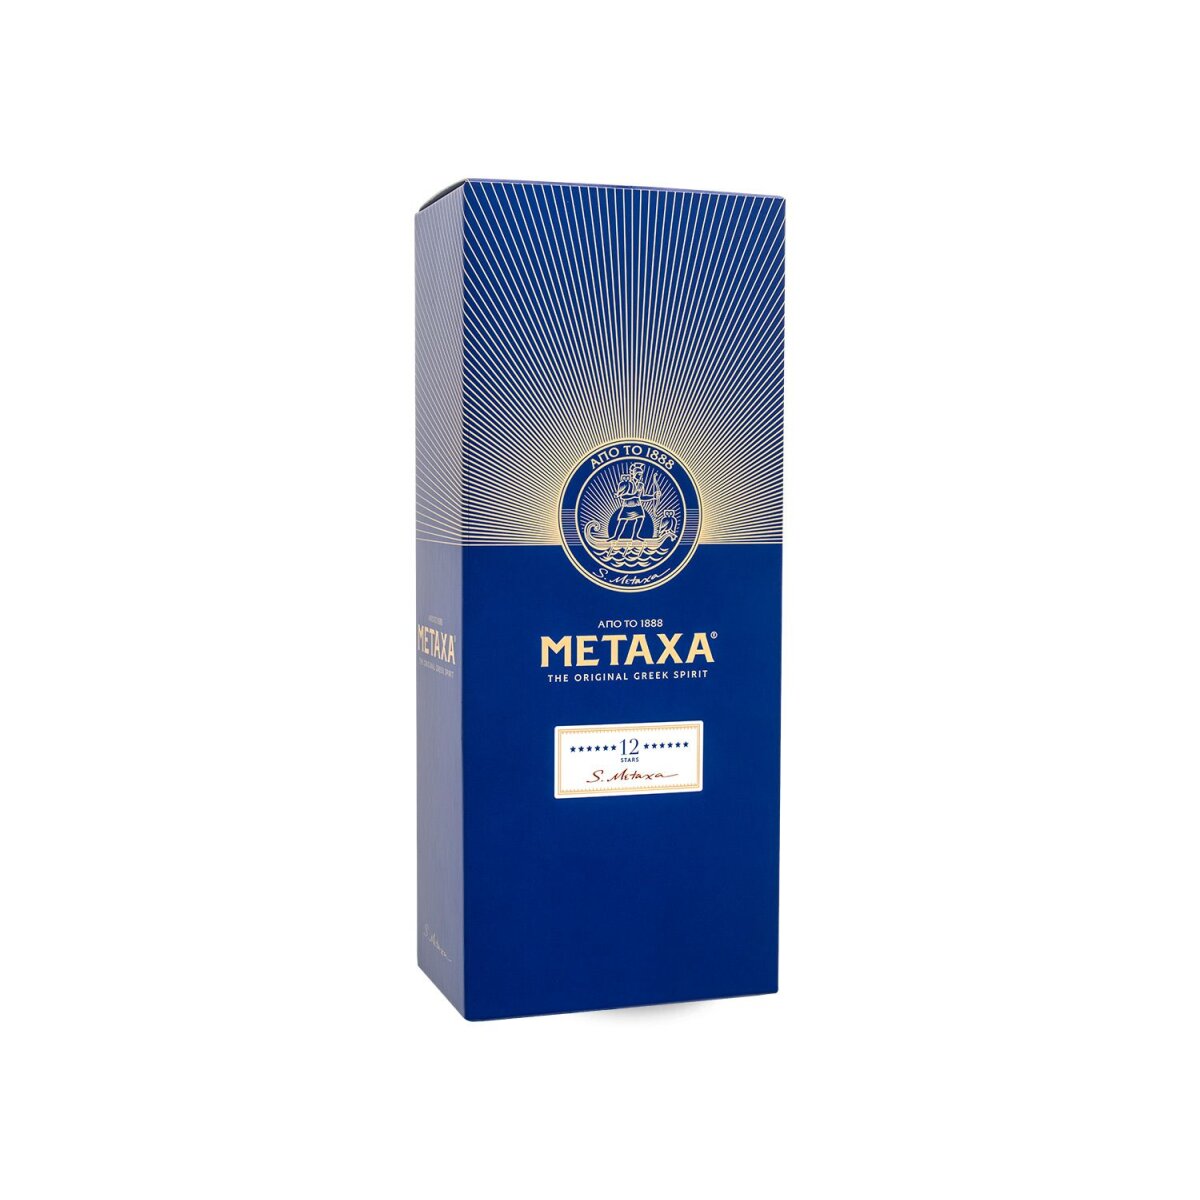 METAXA 12 Sterne 40% Vol, 24,99 €